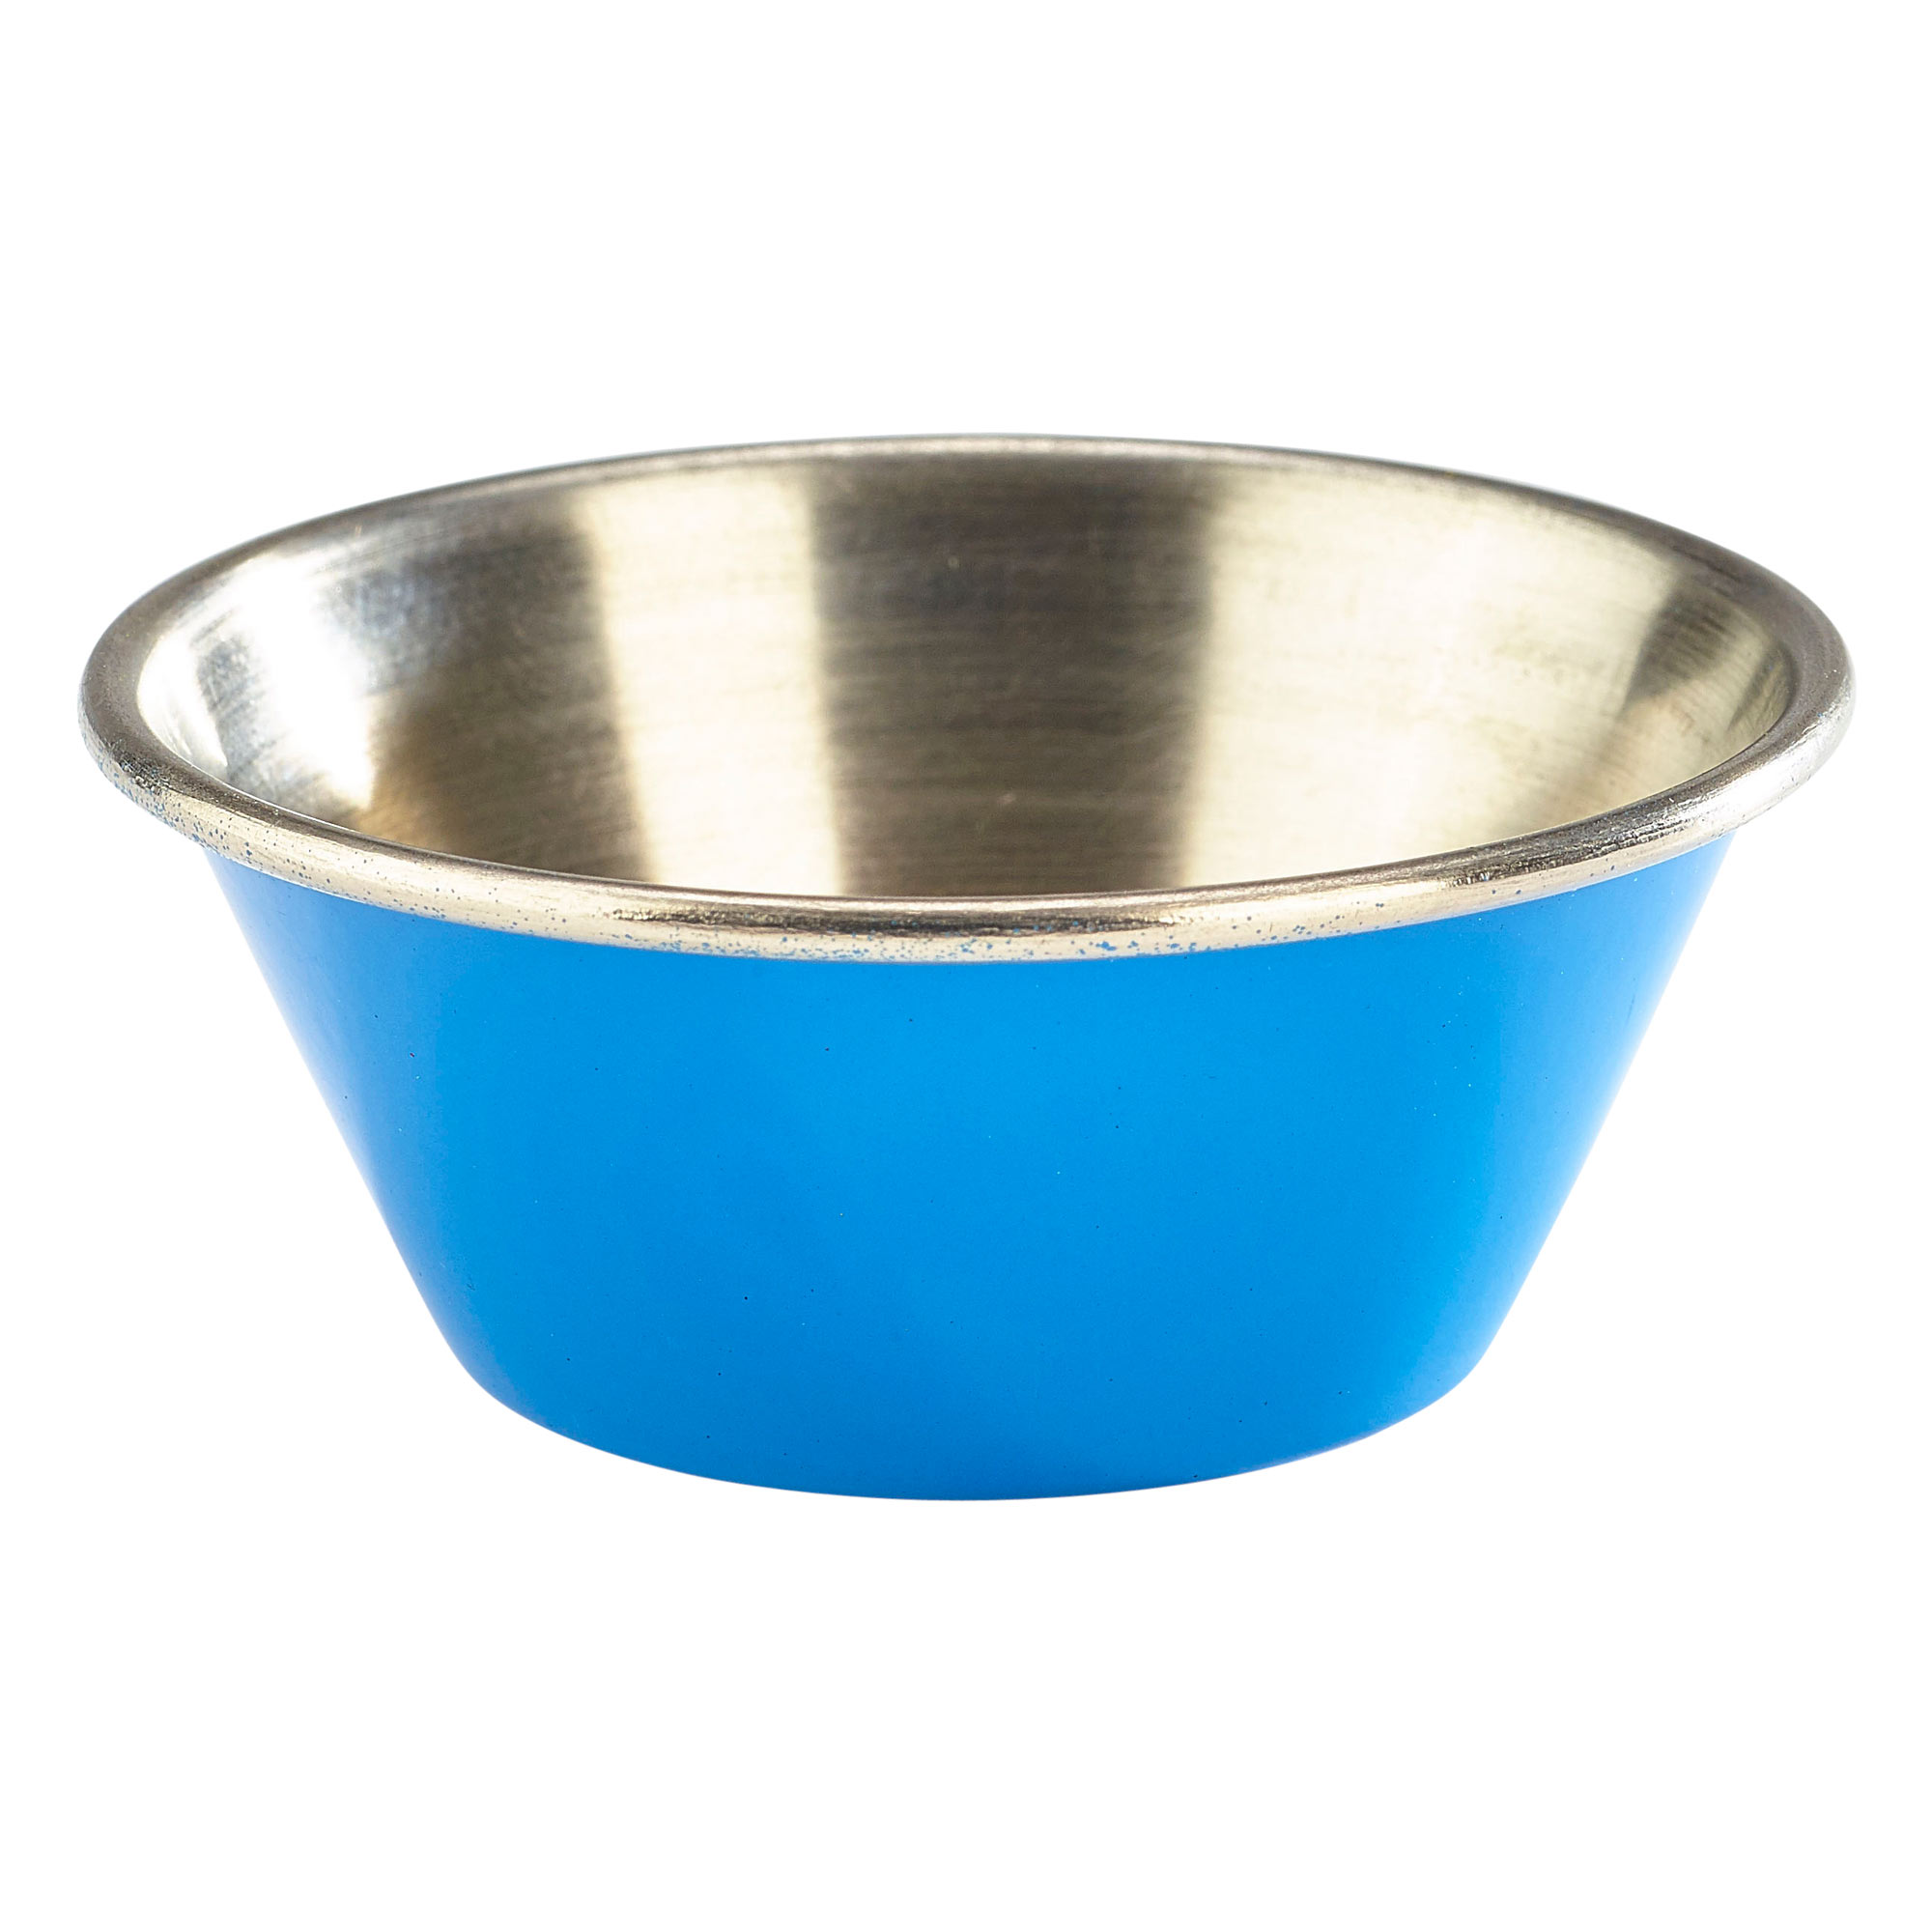 Coloured Sauce Pots Blue Stainless Steel Ramekins 1.5oz Set of 4 43ml 